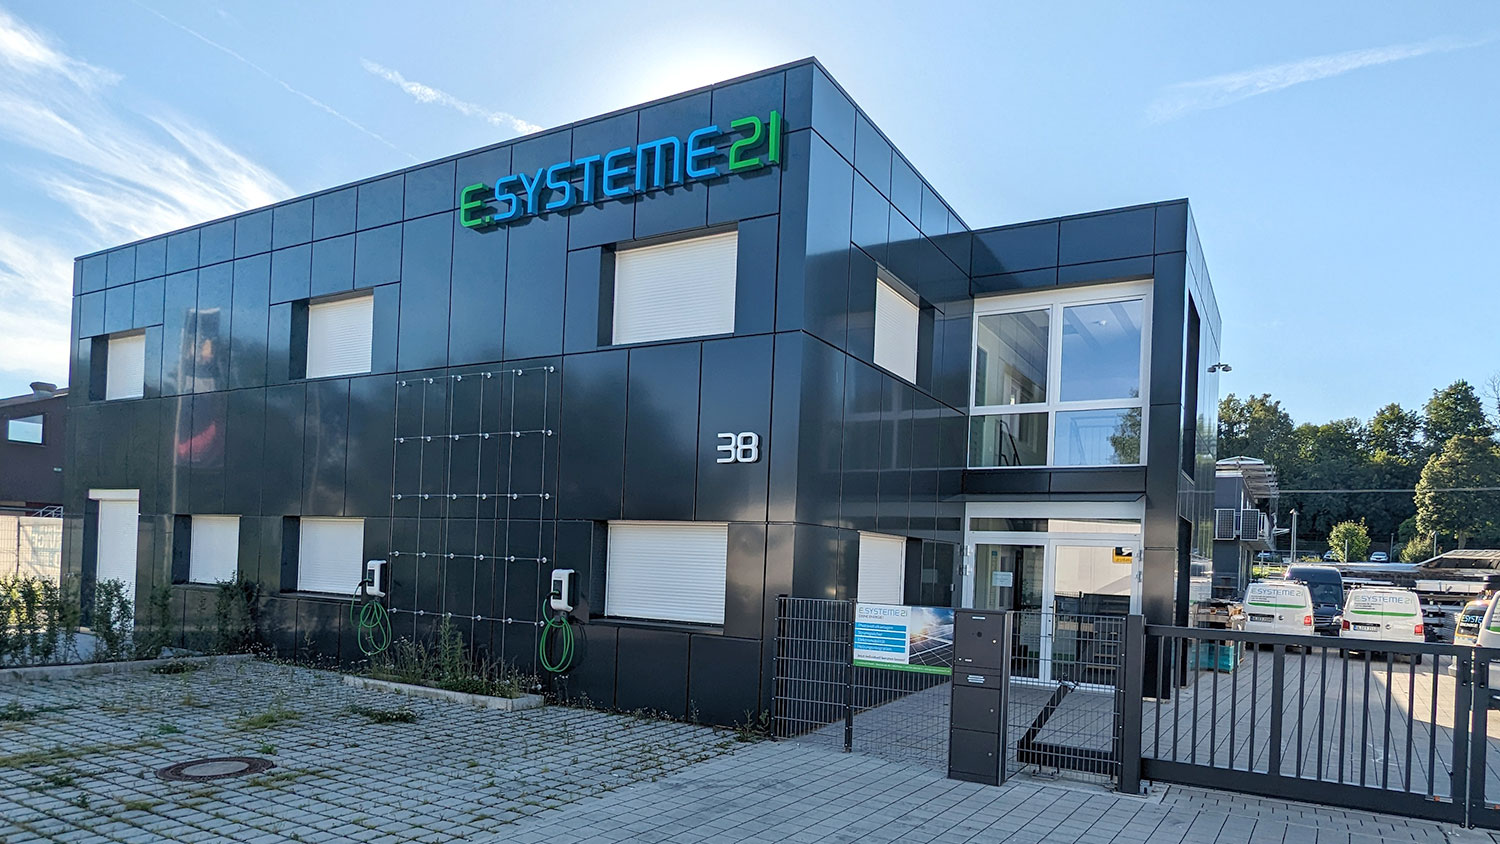 Firmengebäude e.systeme21 im Ulmer Donautal